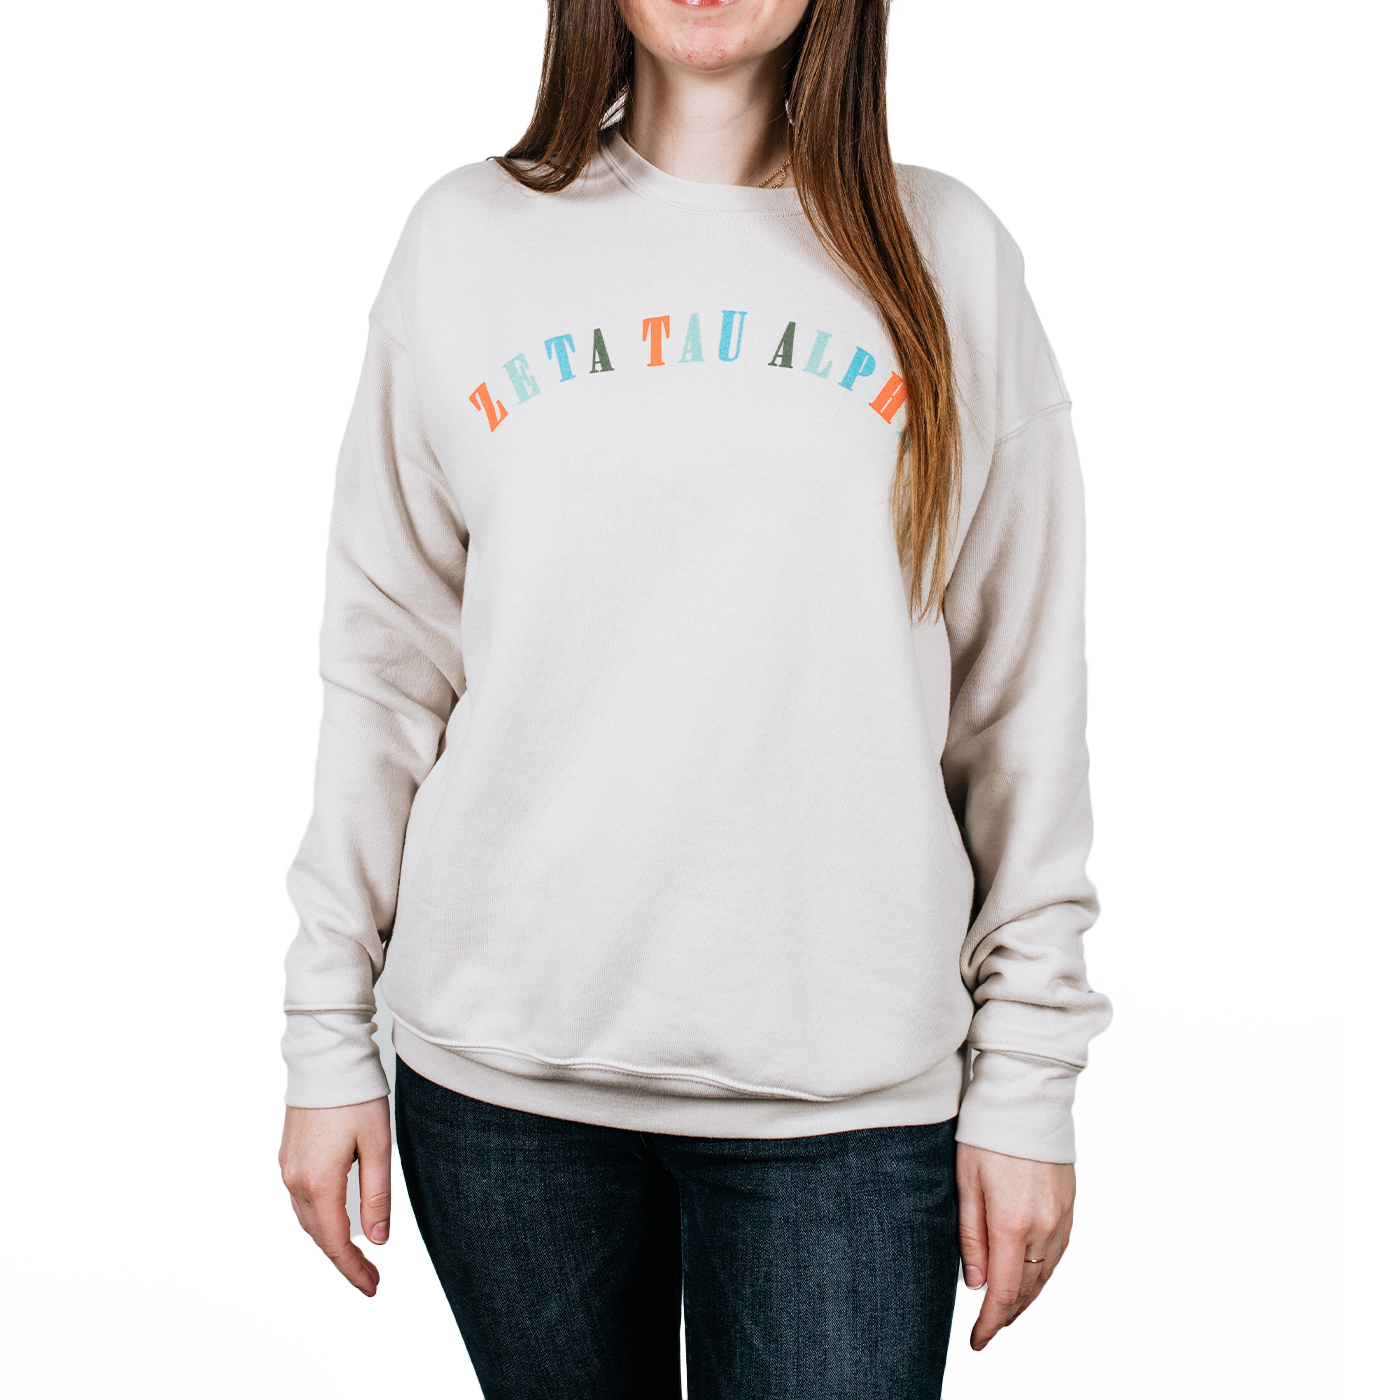 Zeta Tau Alpha Colorful Sweatshirt